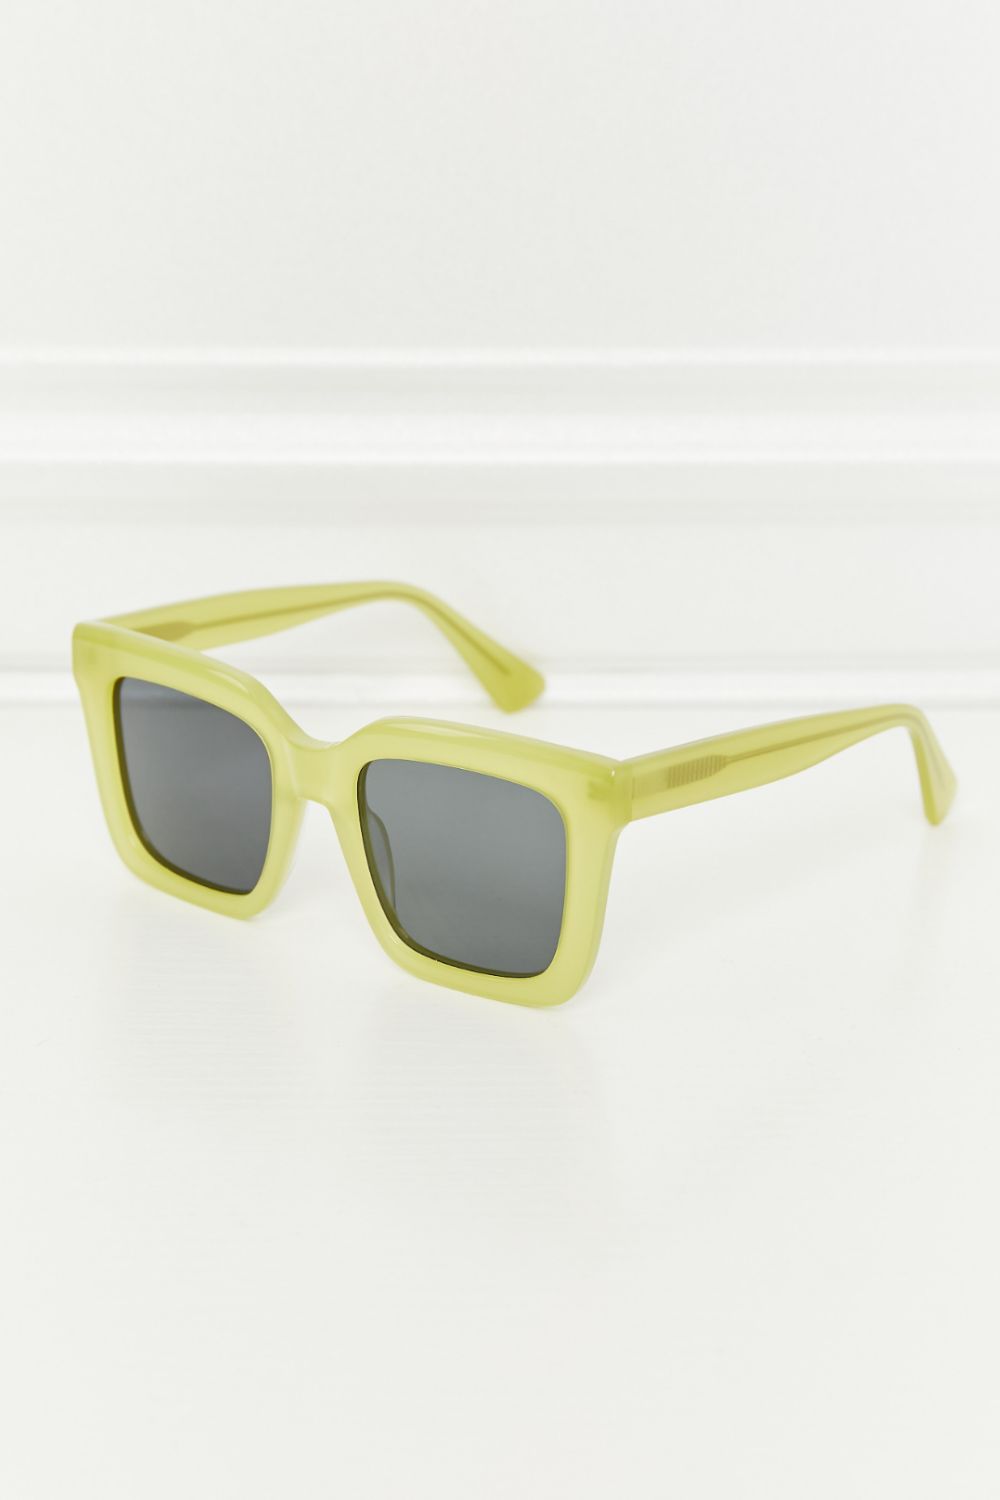 White Smoke Selfie Sunday Square TAC Polarization Lens Sunglasses - in green Sunglasses